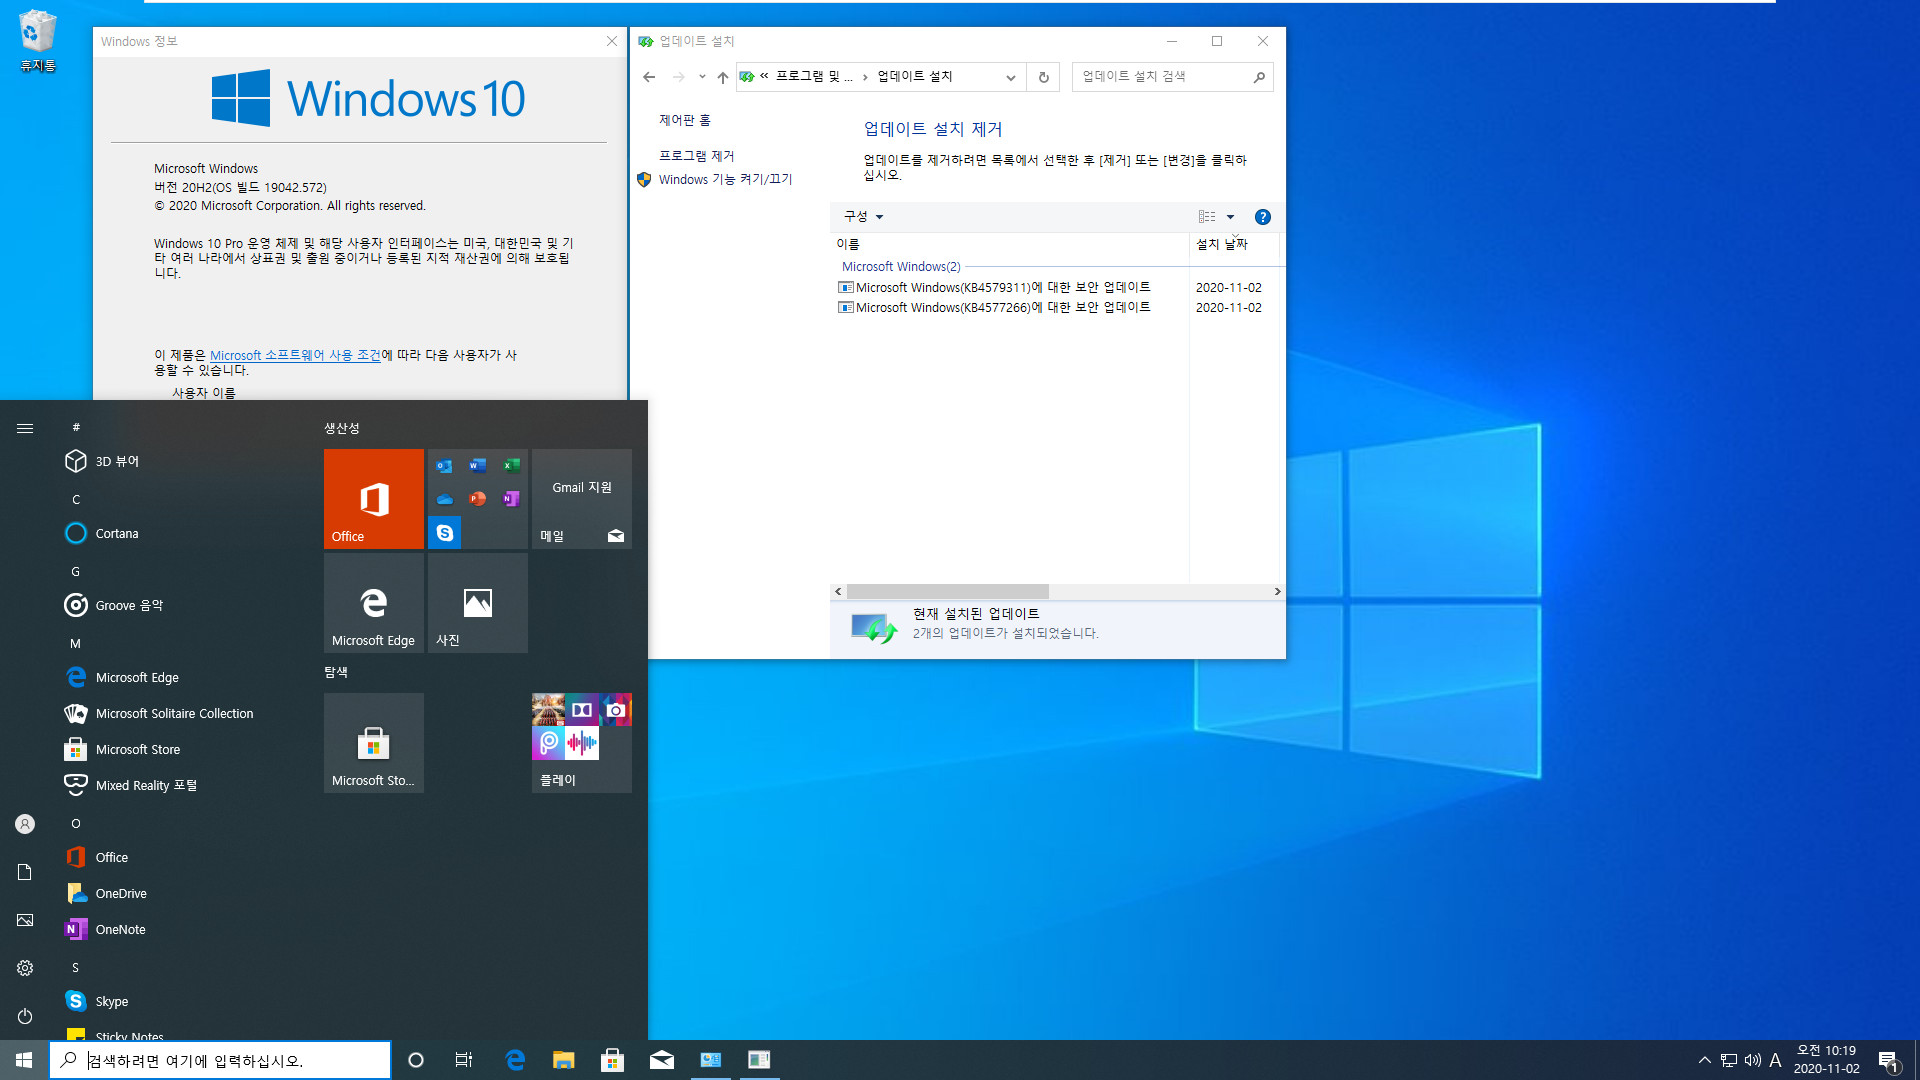 Windows 10 버전 20H2 기능 업데이트 KB4562830 폴더의 mum 파일들만 찾아서 설치하기.bat - 크로미엄 엣지 설치하지 않고 버전 20H2만 설치하기 테스트 - 뻘짓했네요 2020-11-02_101947.jpg